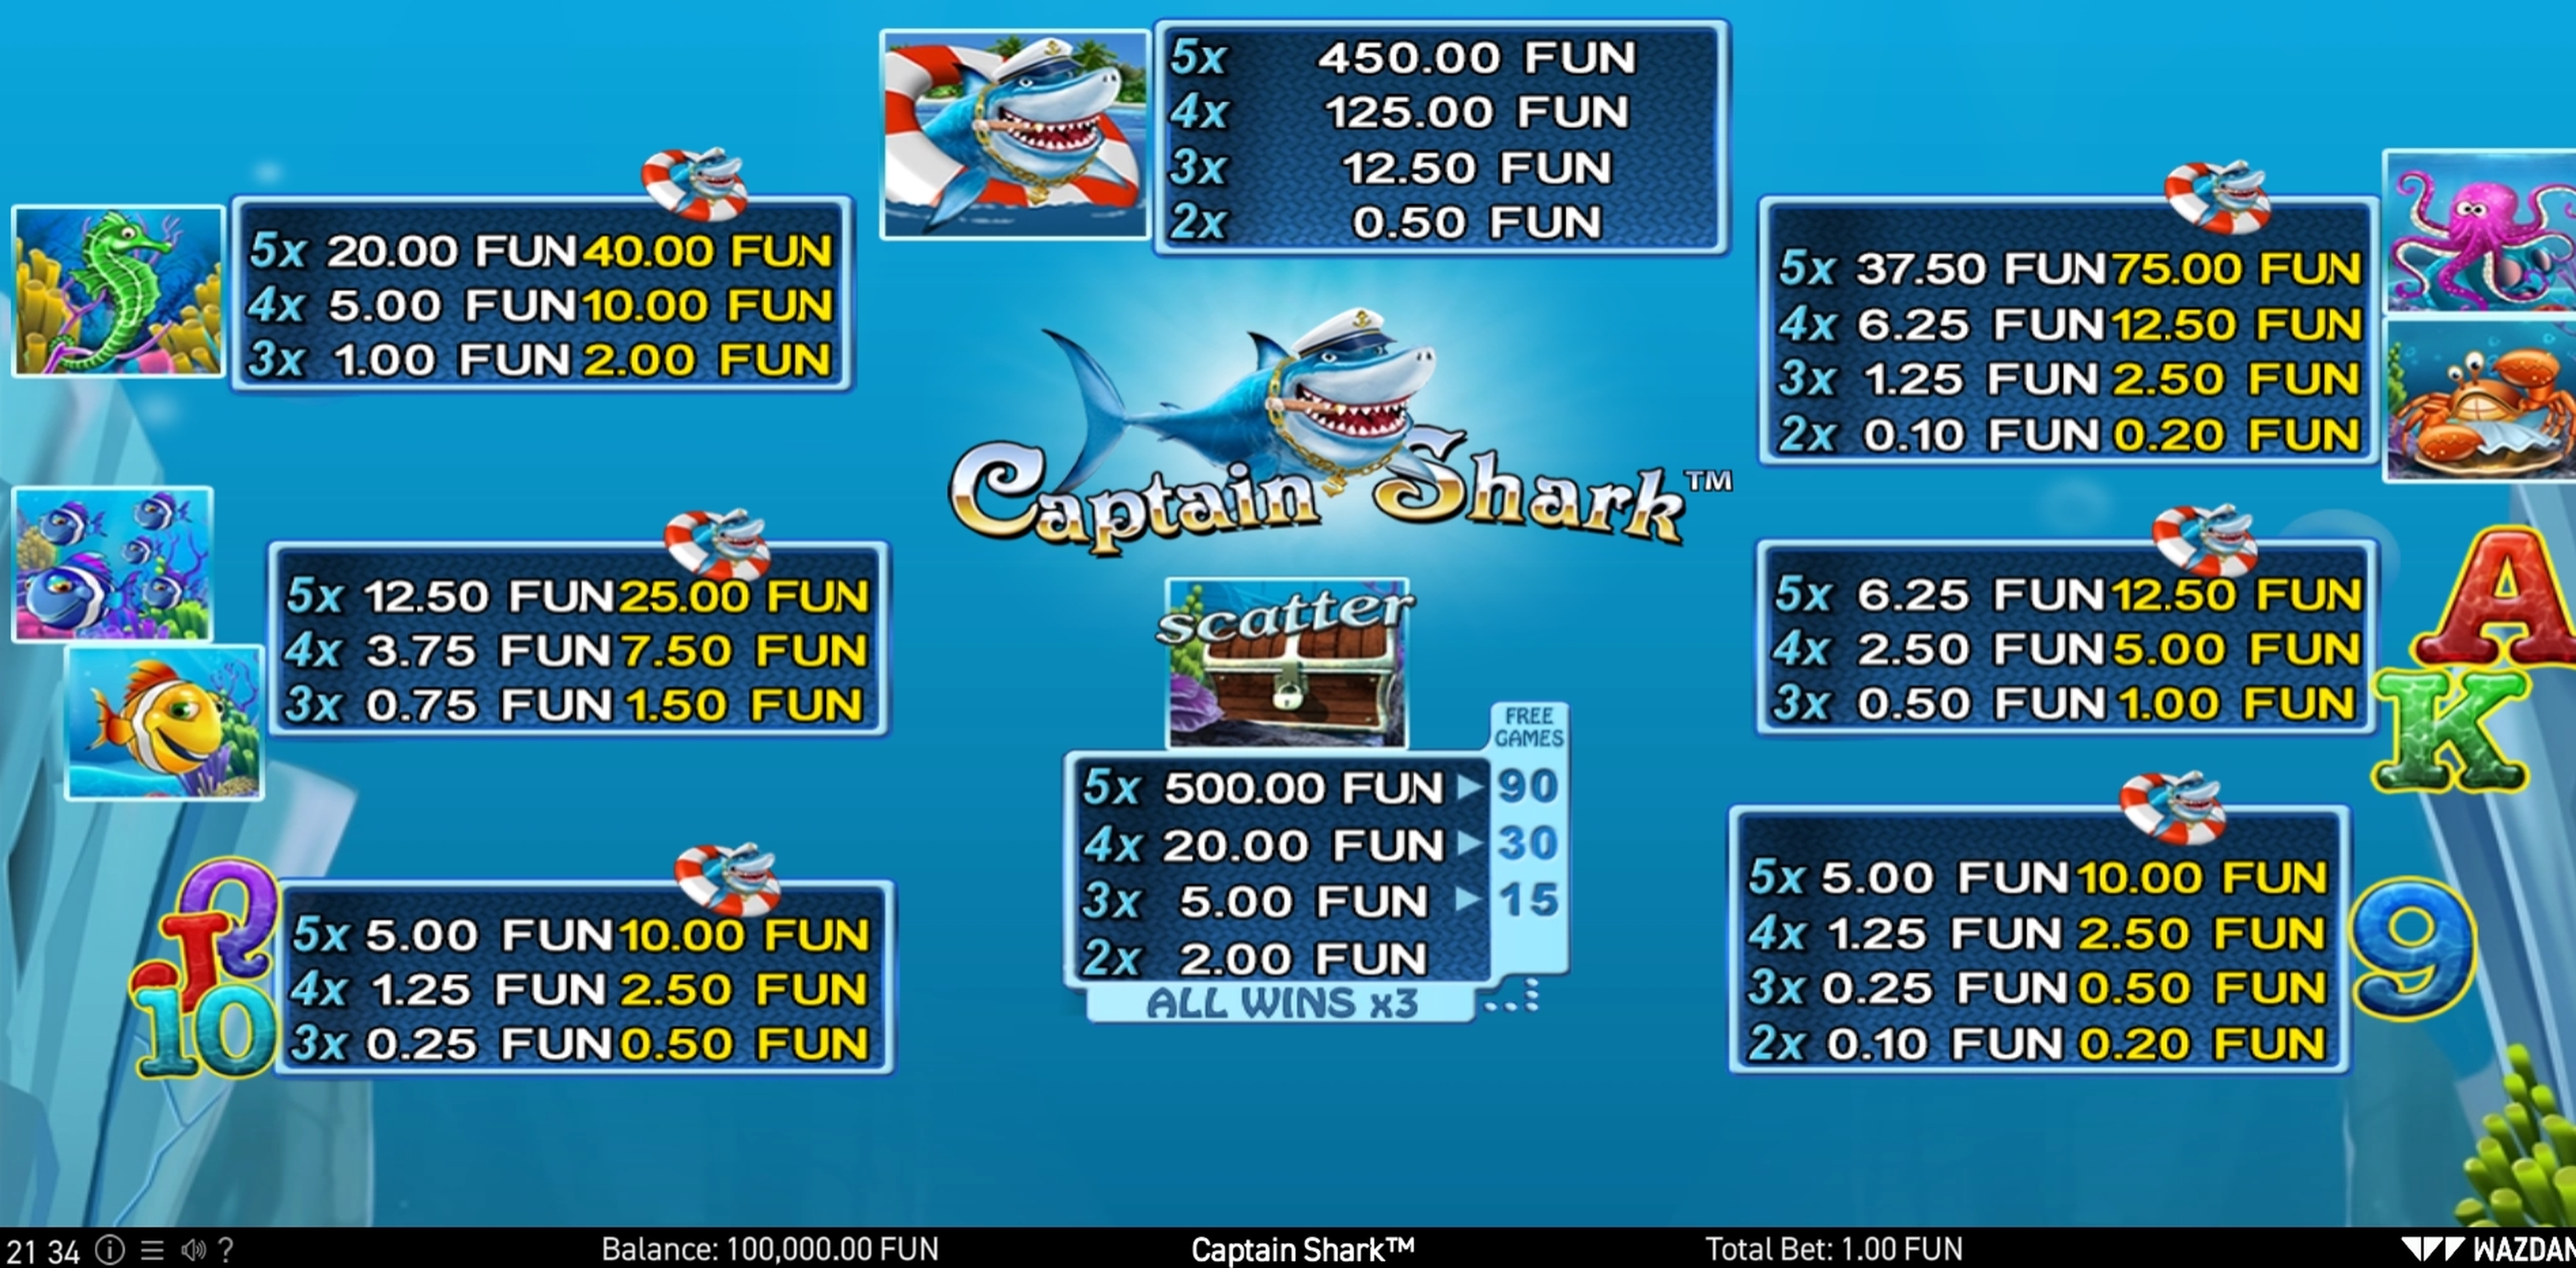 Info of Captain Shark Slot Game by Wazdan